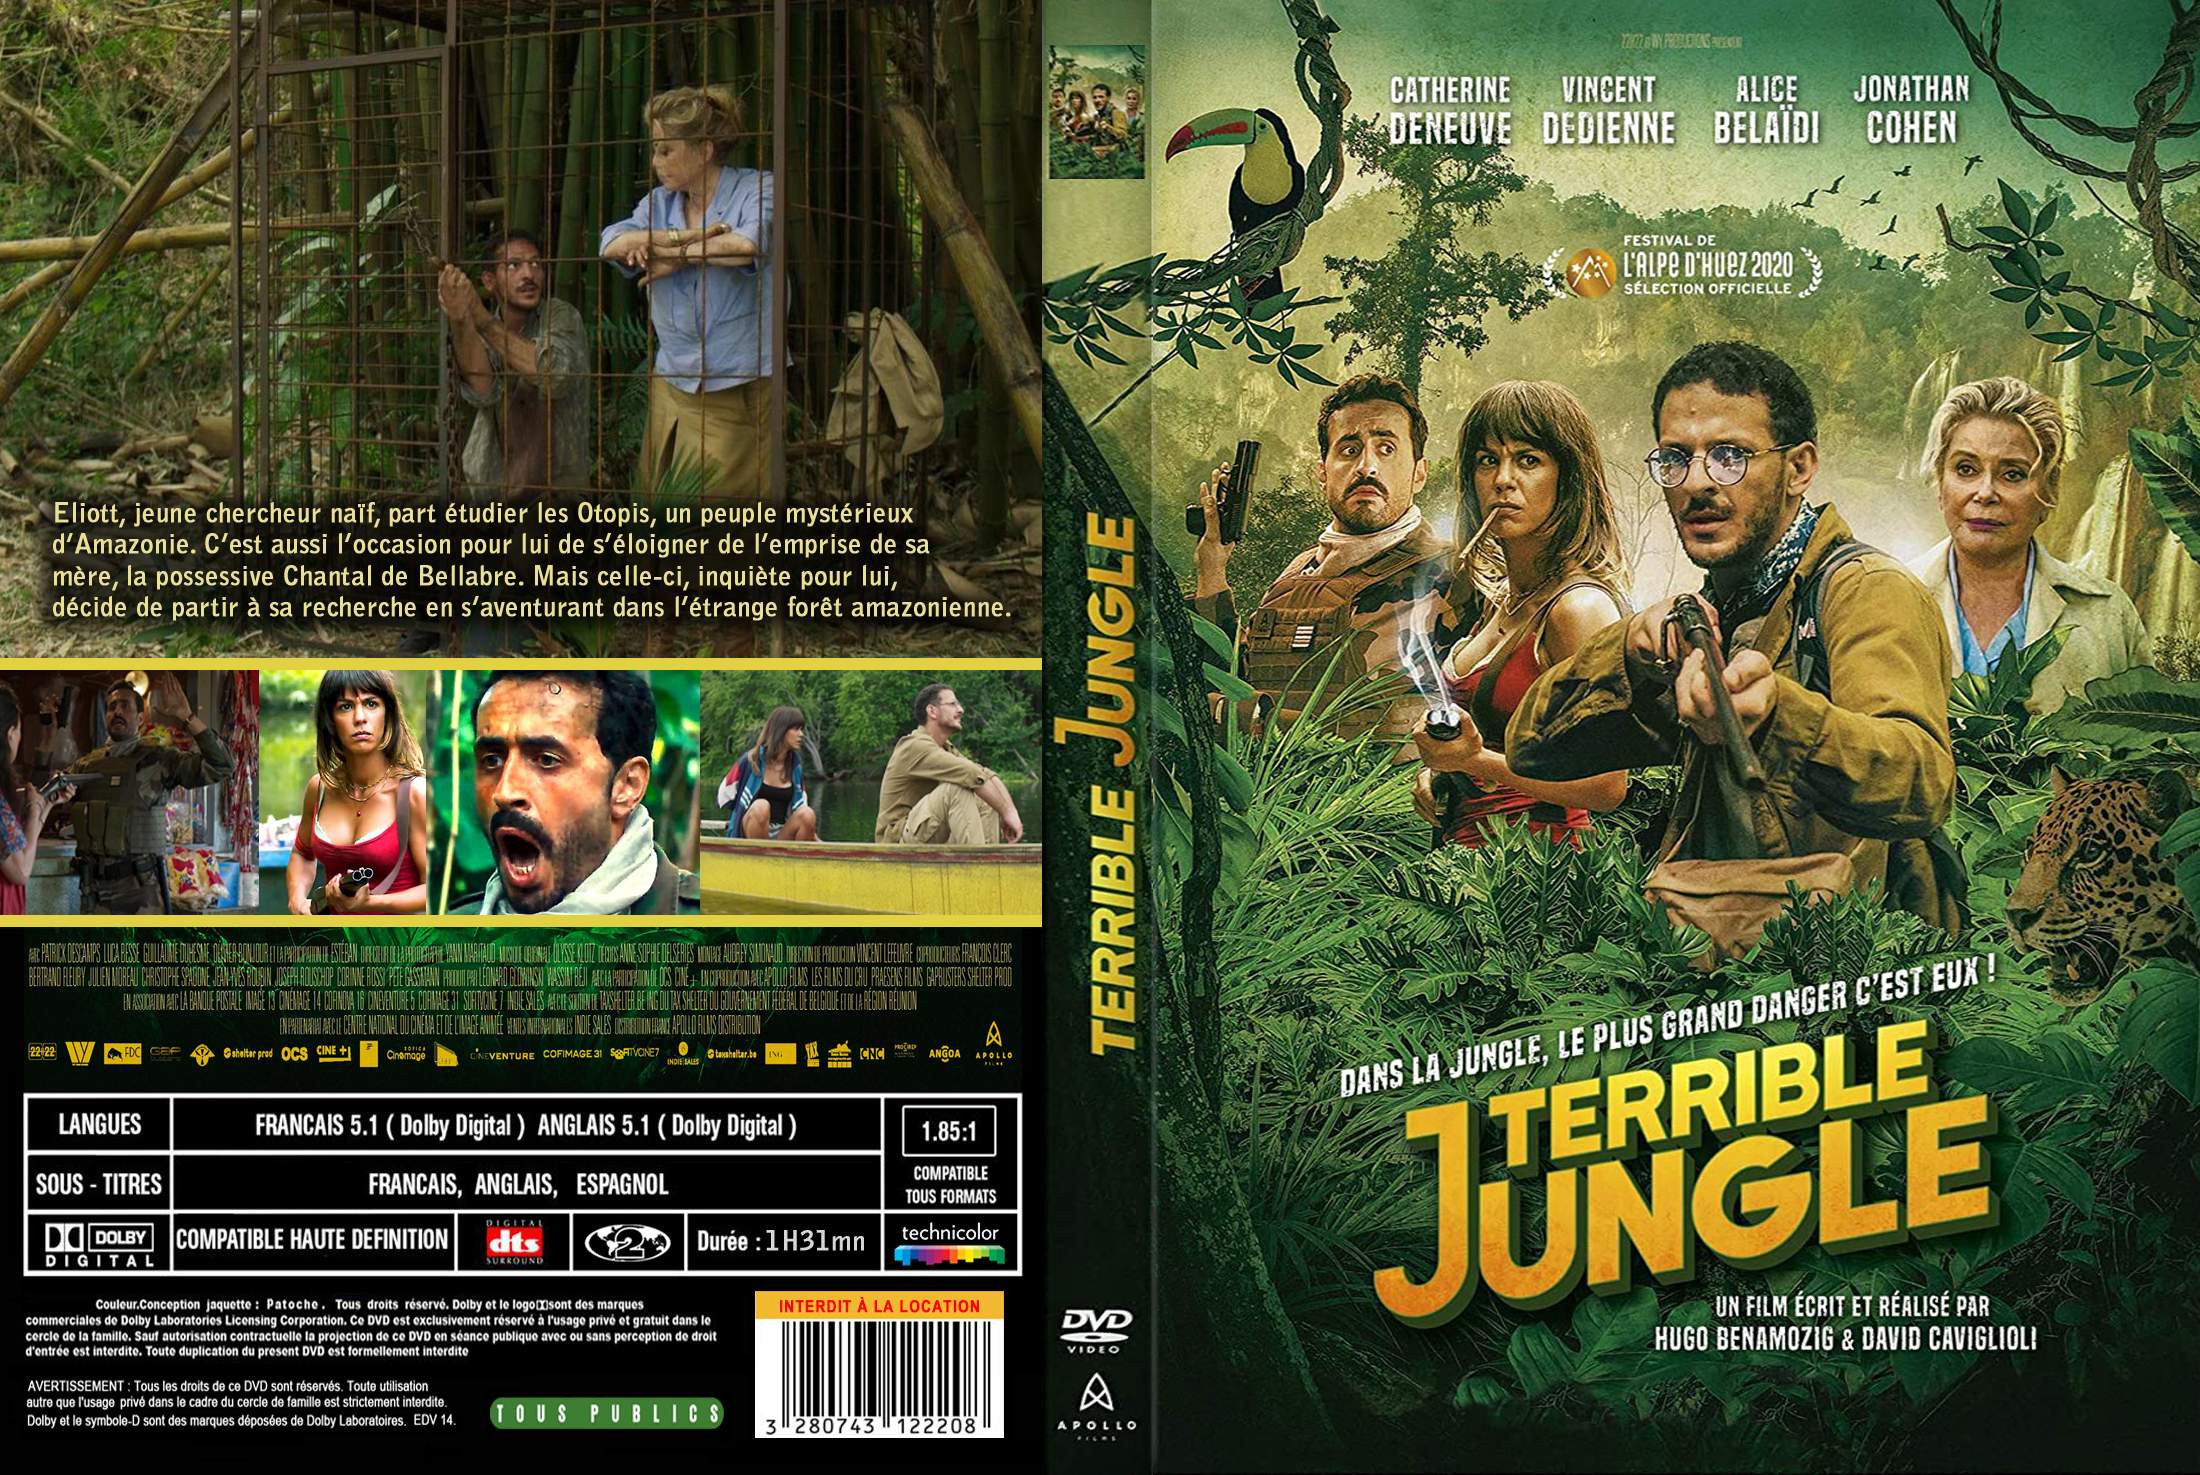 Jaquette DVD Terrible Jungle custom